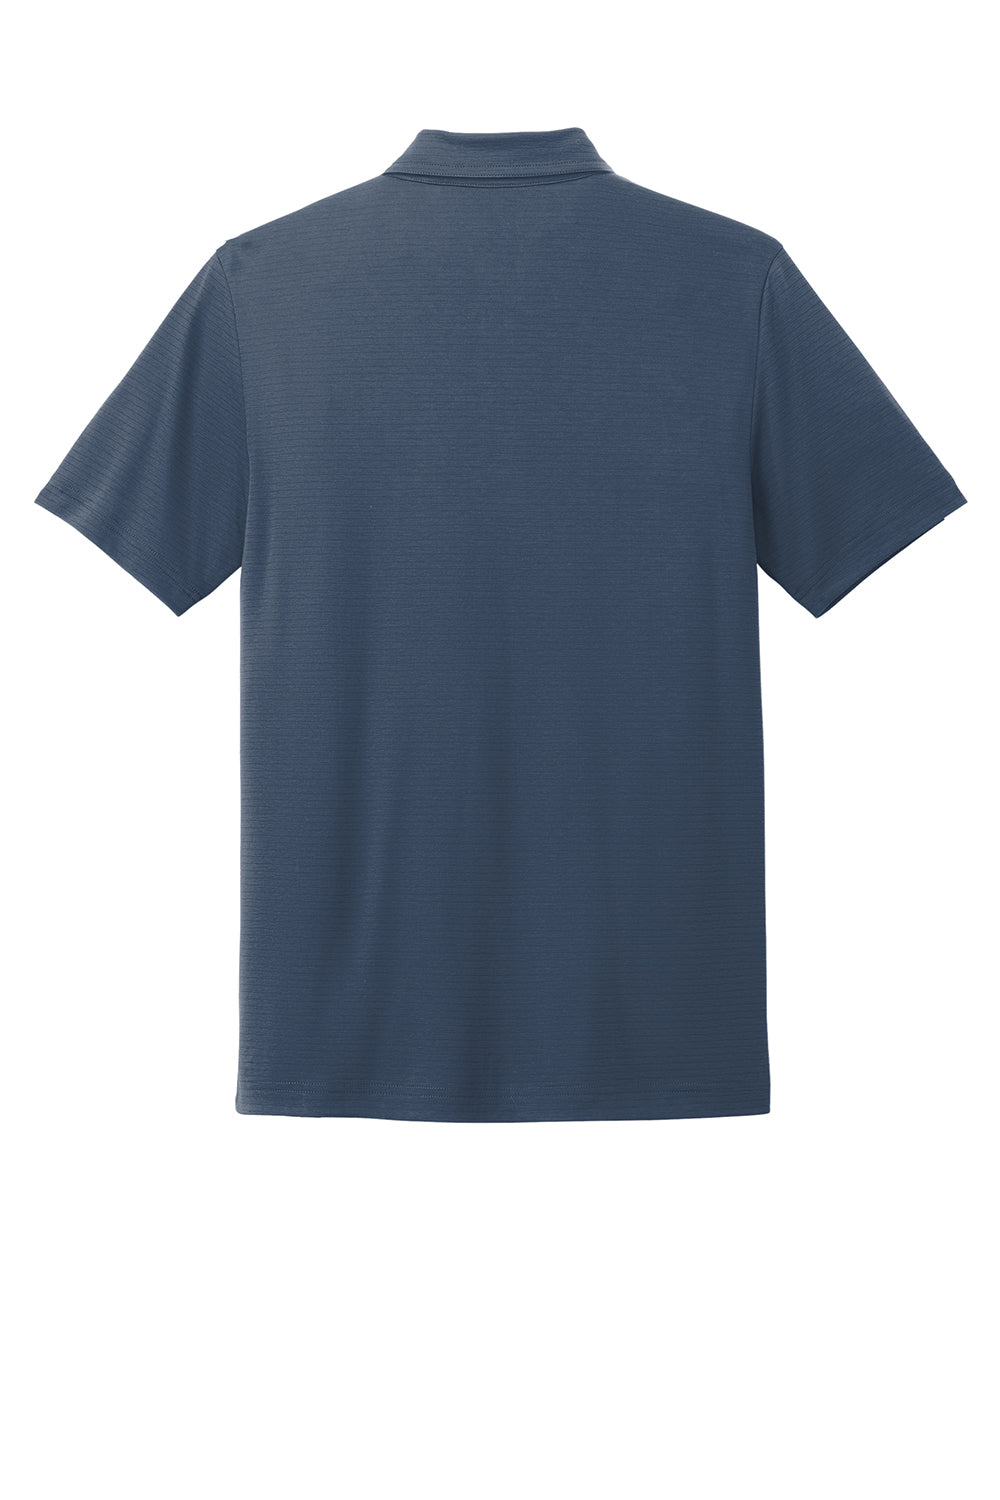 TravisMathew TM1MY399 Mens Bayfront Moisture Wicking Short Sleeve Polo Shirt Insignia Blue Flat Back